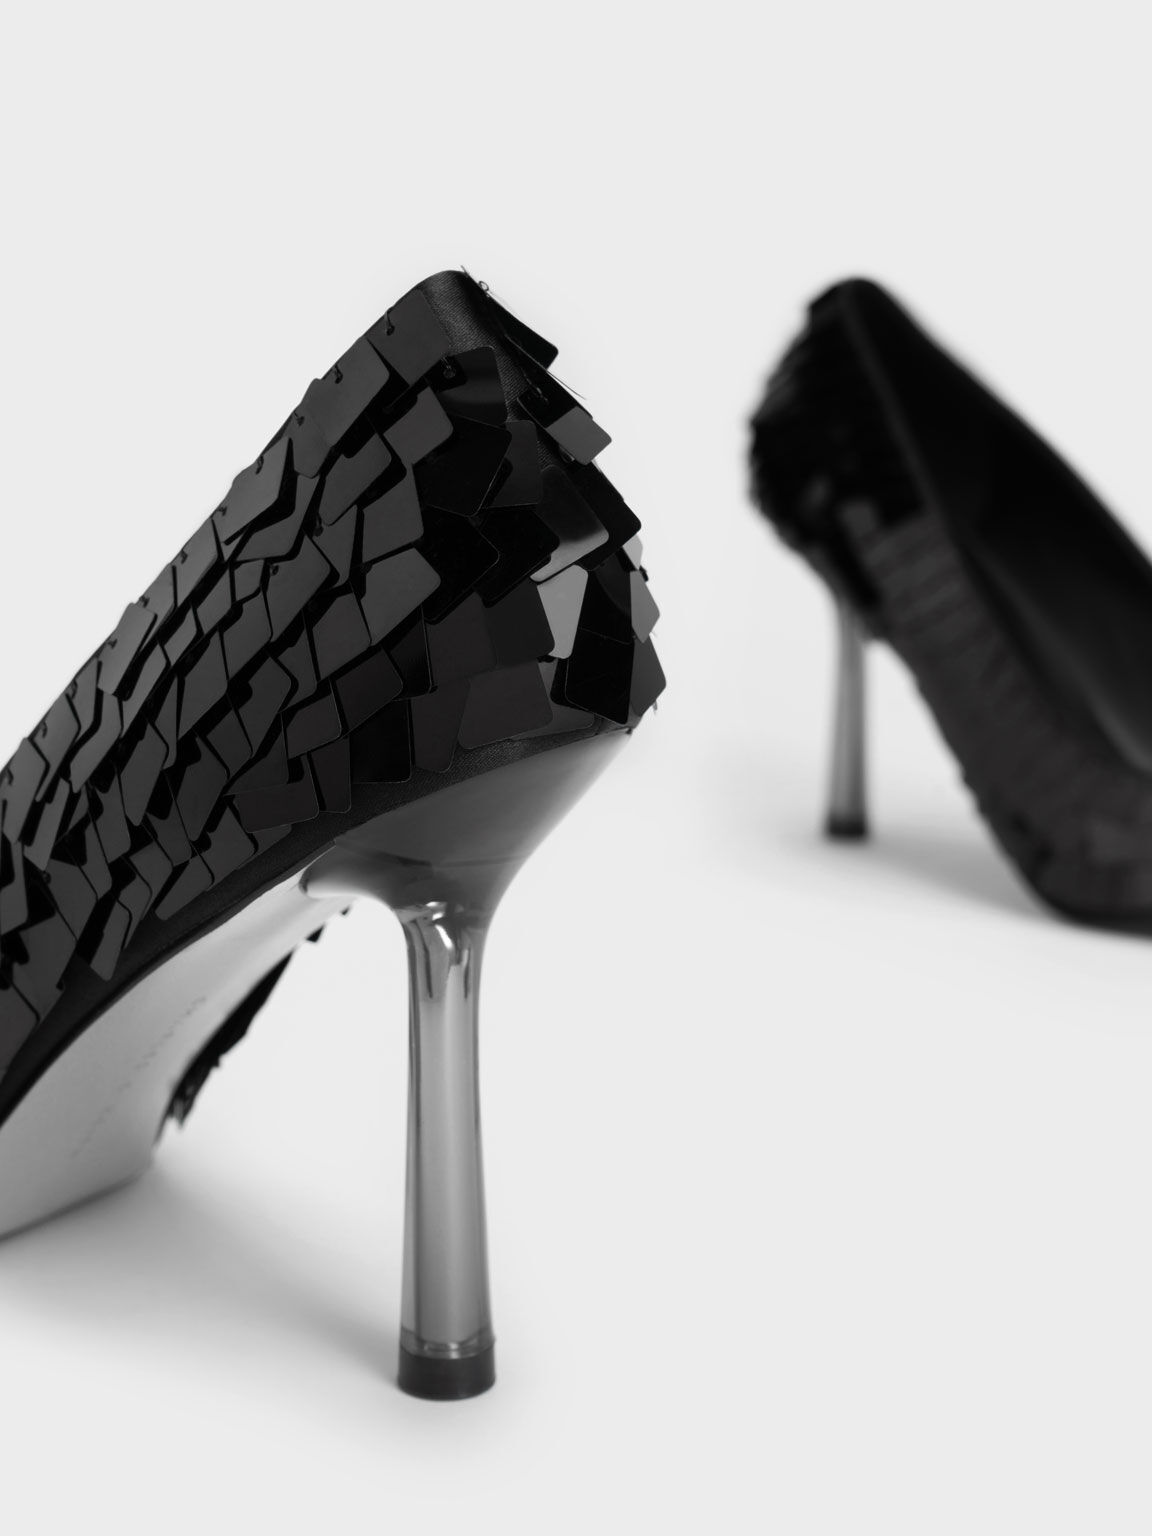 Sequinned Stiletto Heel Pumps, Black, hi-res